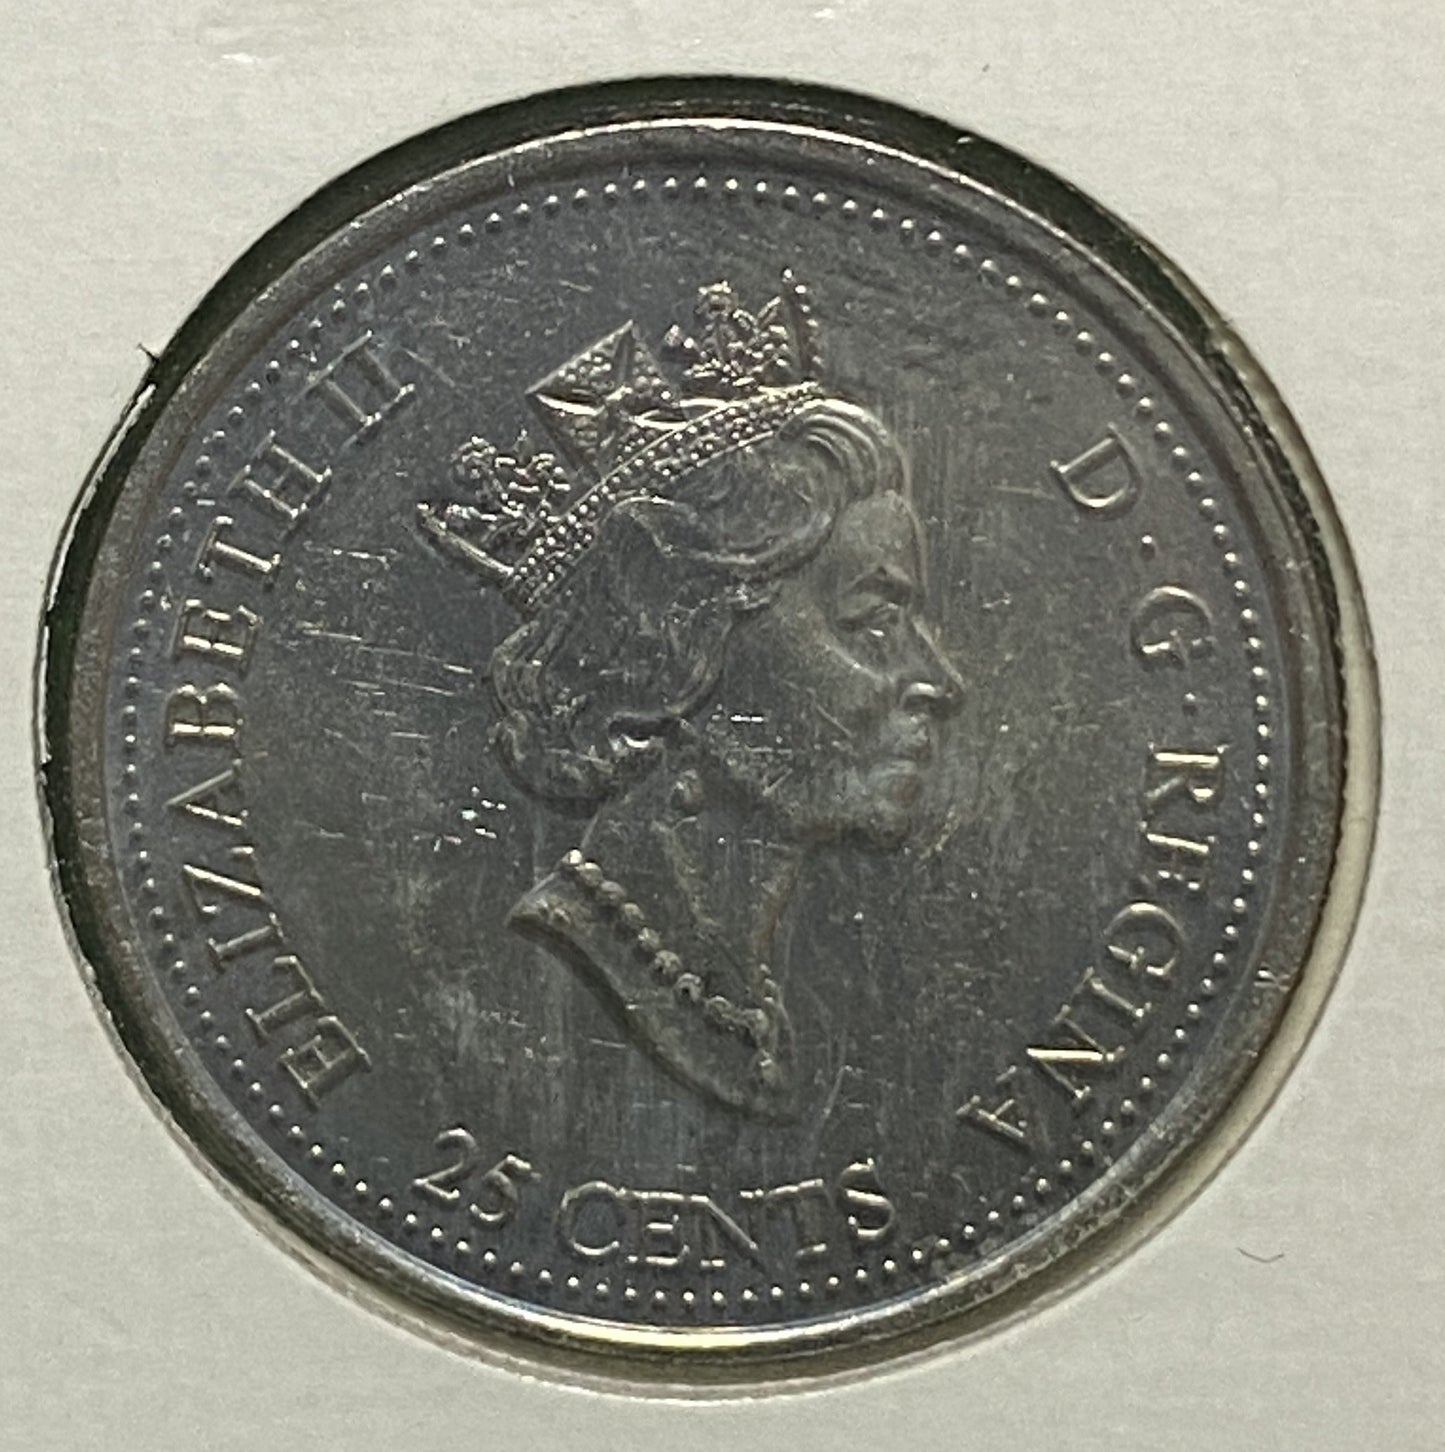 CANADIAN 2000 MILLENNIUM JANUARY PRIDE Queen Elizabeth II  25 CENTS QUARTER COIN AU / UNC CONDITION